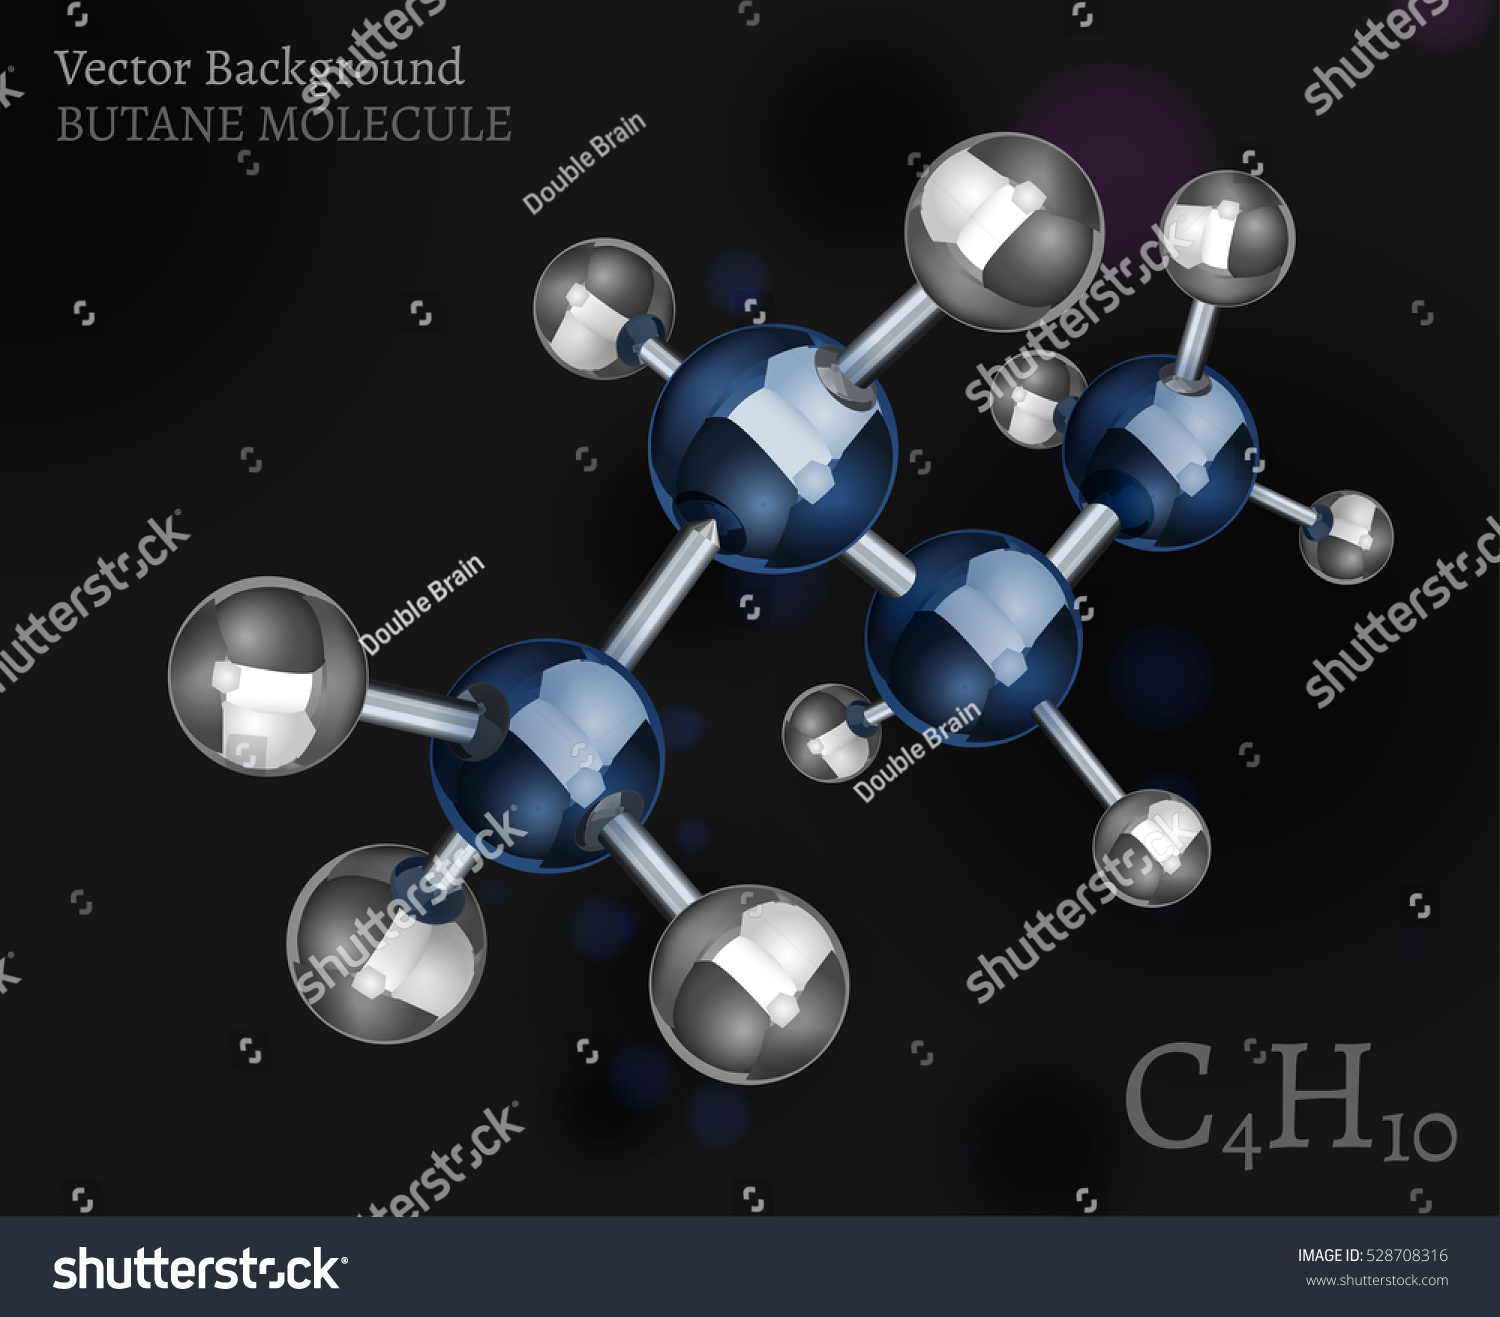 Butane Molecule In 3d Style C4h10 Vector Royalty Free Stock Vector